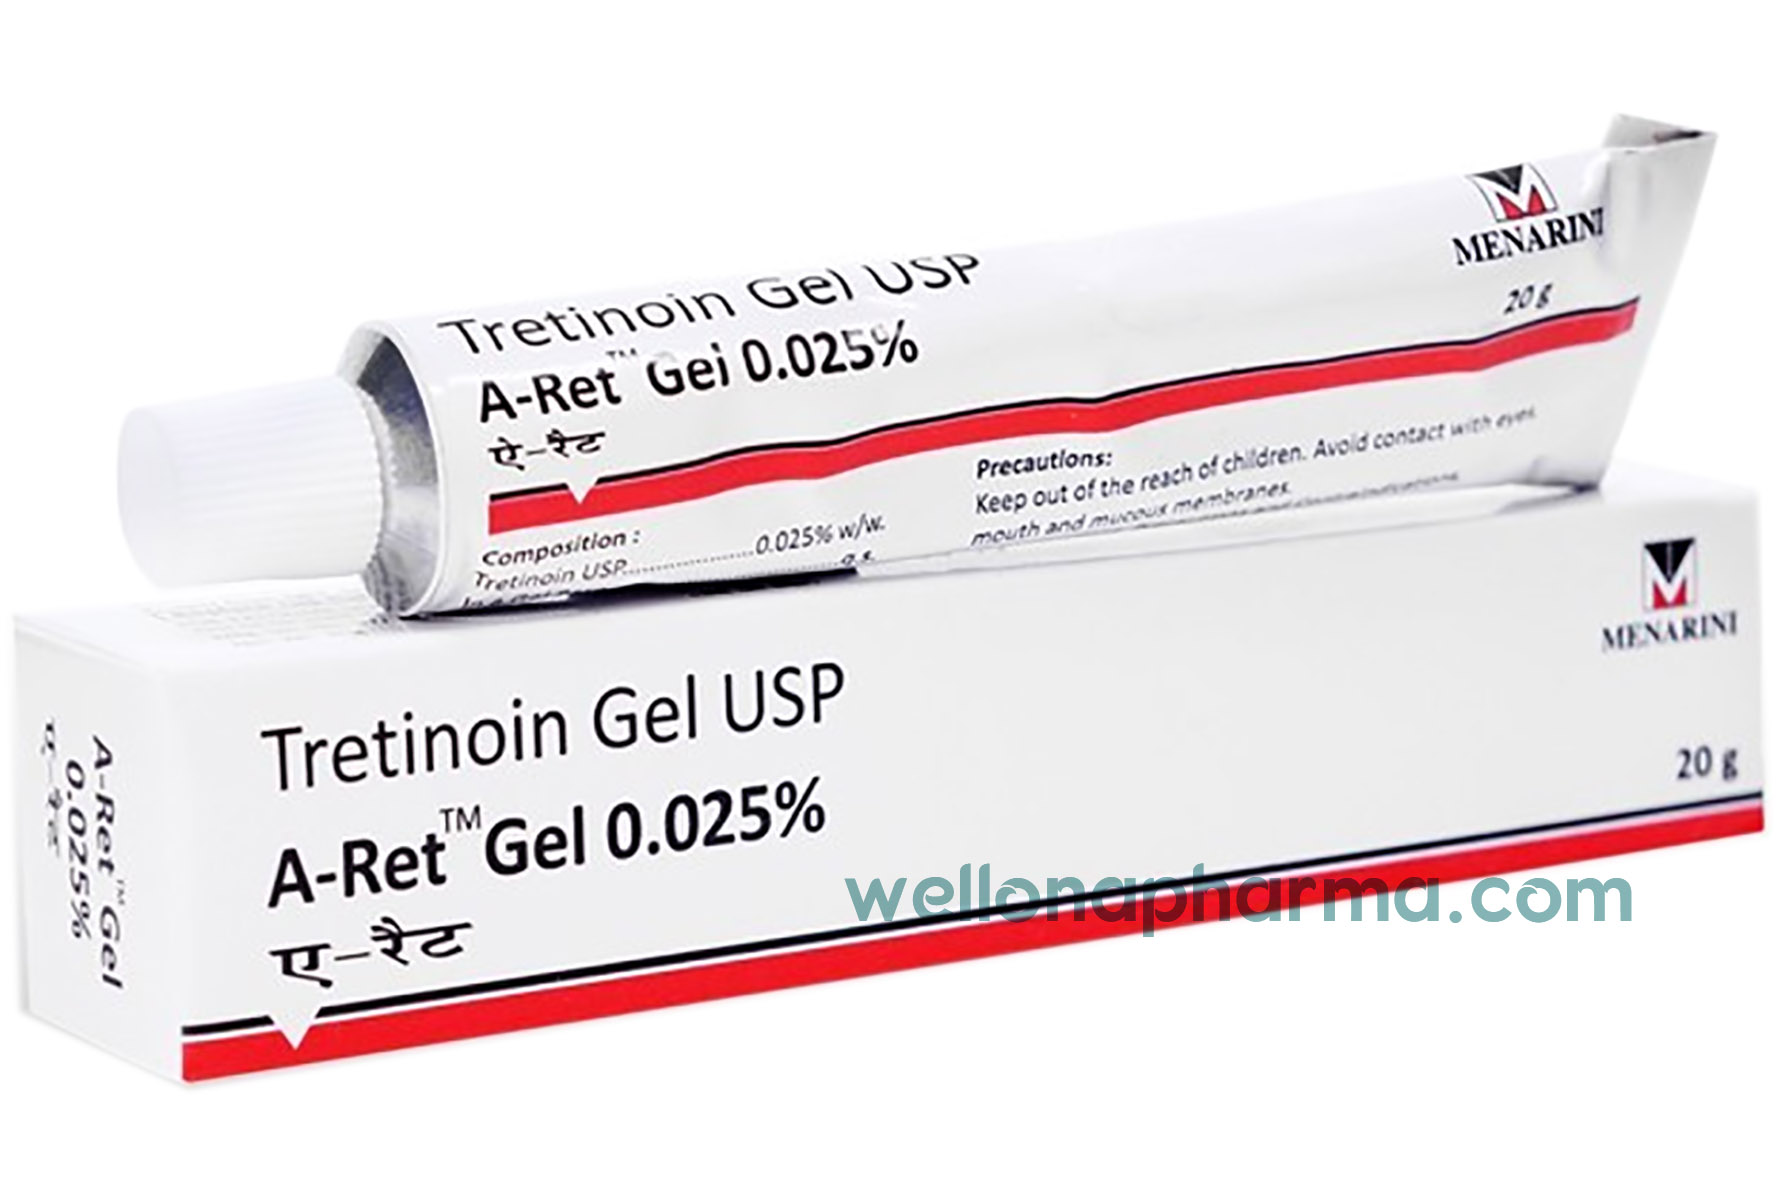 Menarini tretinoin gel отзывы. Tretinoin 0.025 гель. Tretinoin Cream 0.025. Tretinoin Gel USP 0.1. Третиноин гель ЮСП А-рет гель 0,1% tretinoin Gel USP A-Ret Gel 0.1% Menarini.